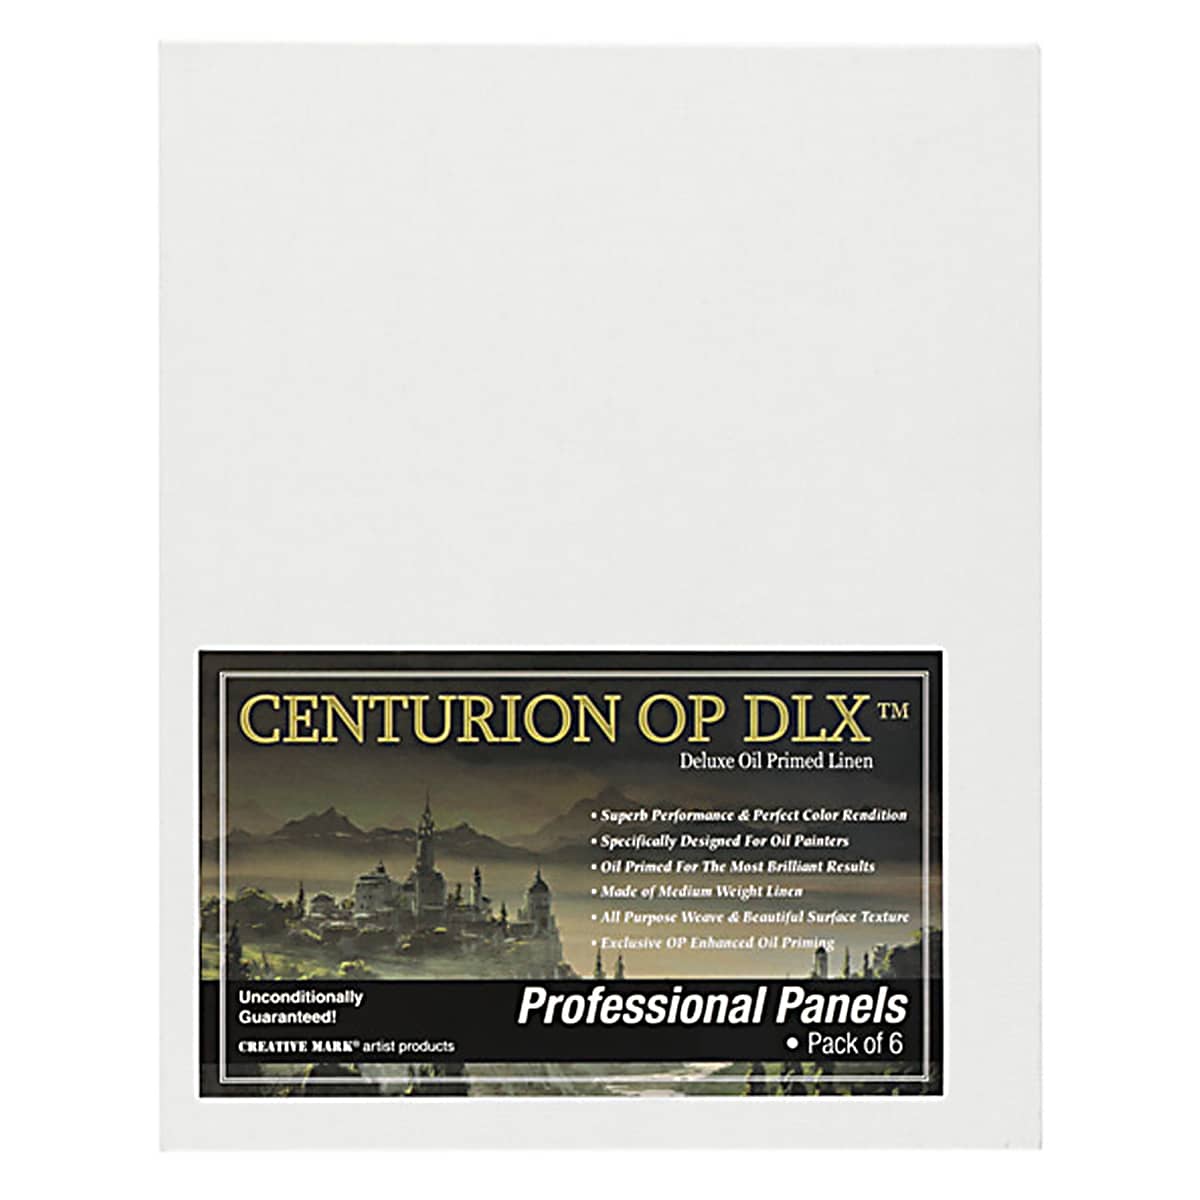 Deluxe Professional Oil Primed Linen Canvas Rolls Centurion (OP DLX)